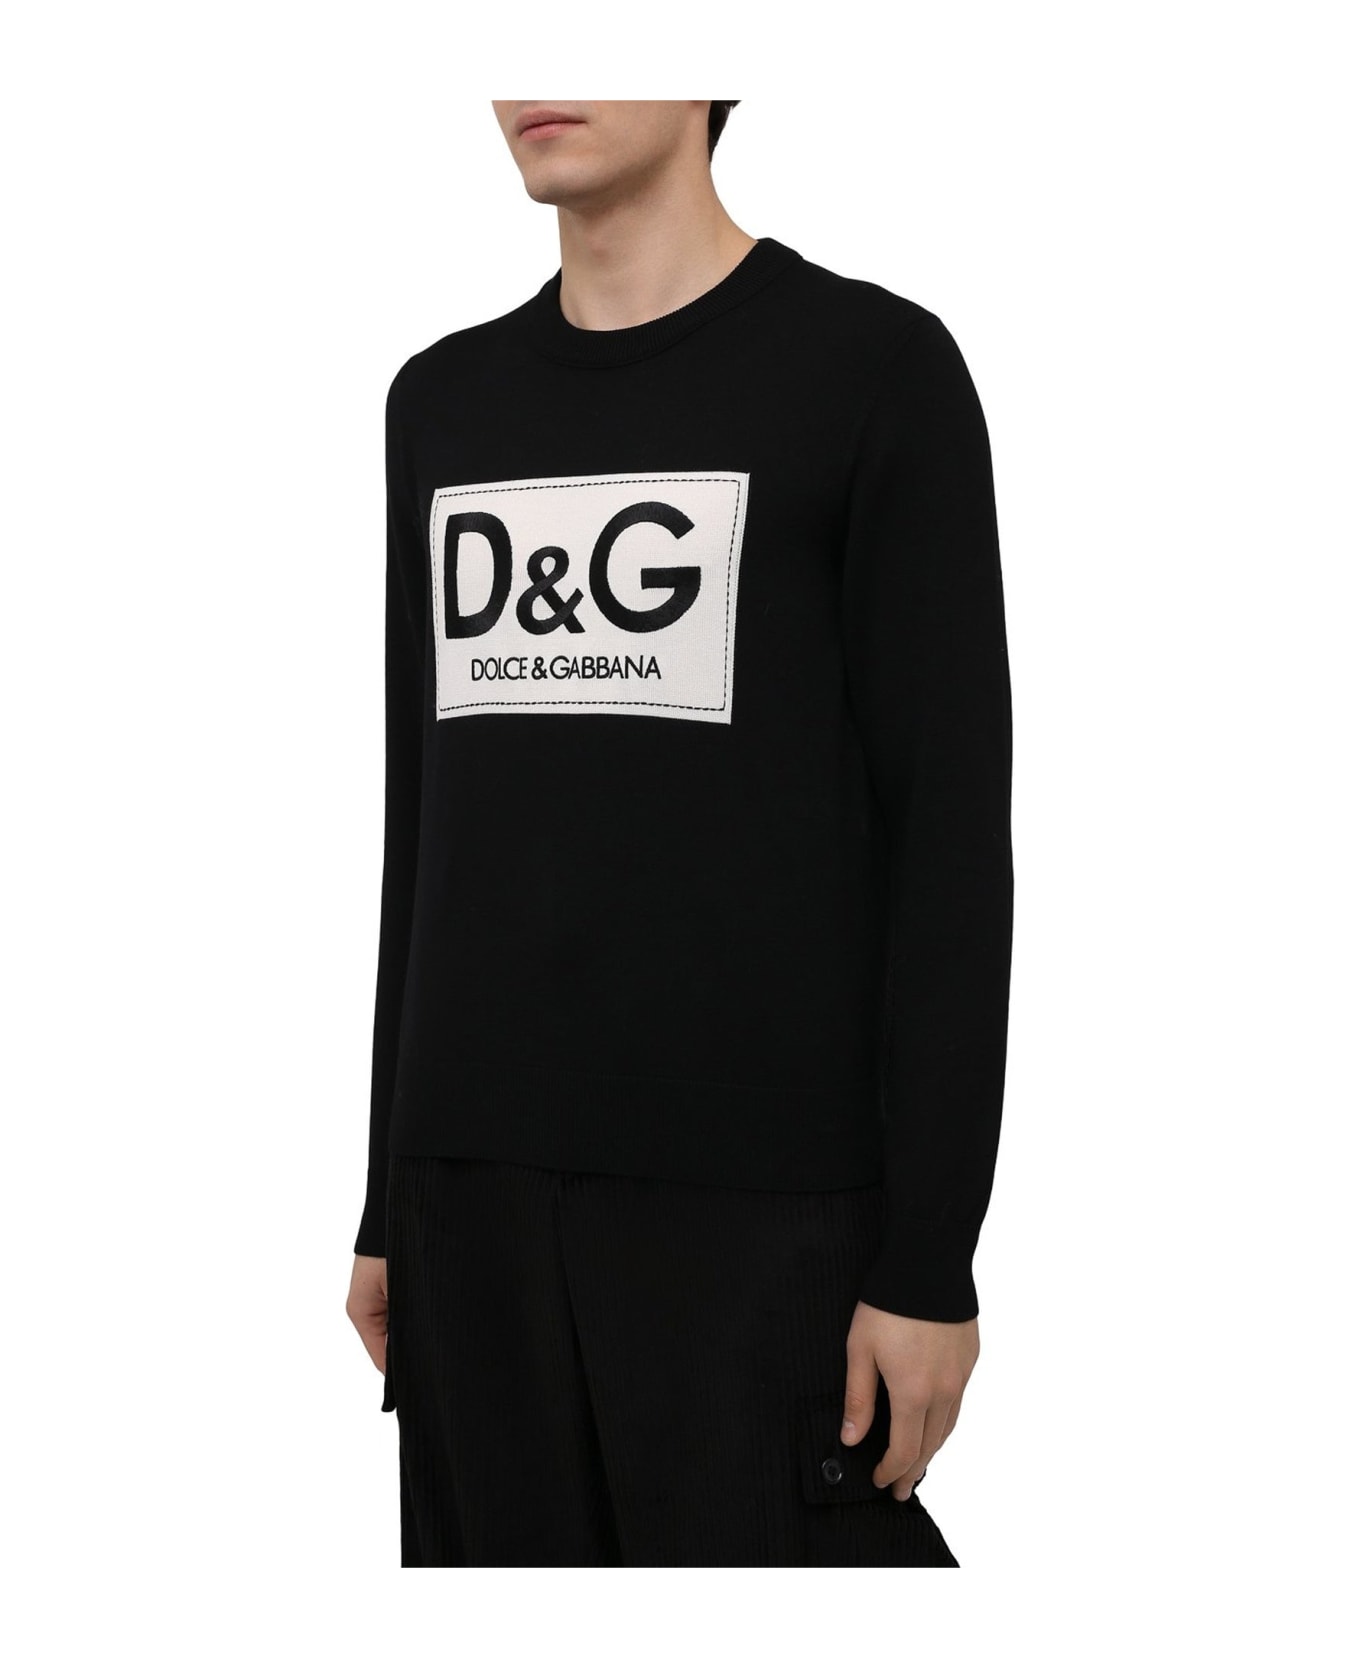 Dolce & Gabbana Dg Pullover - Black